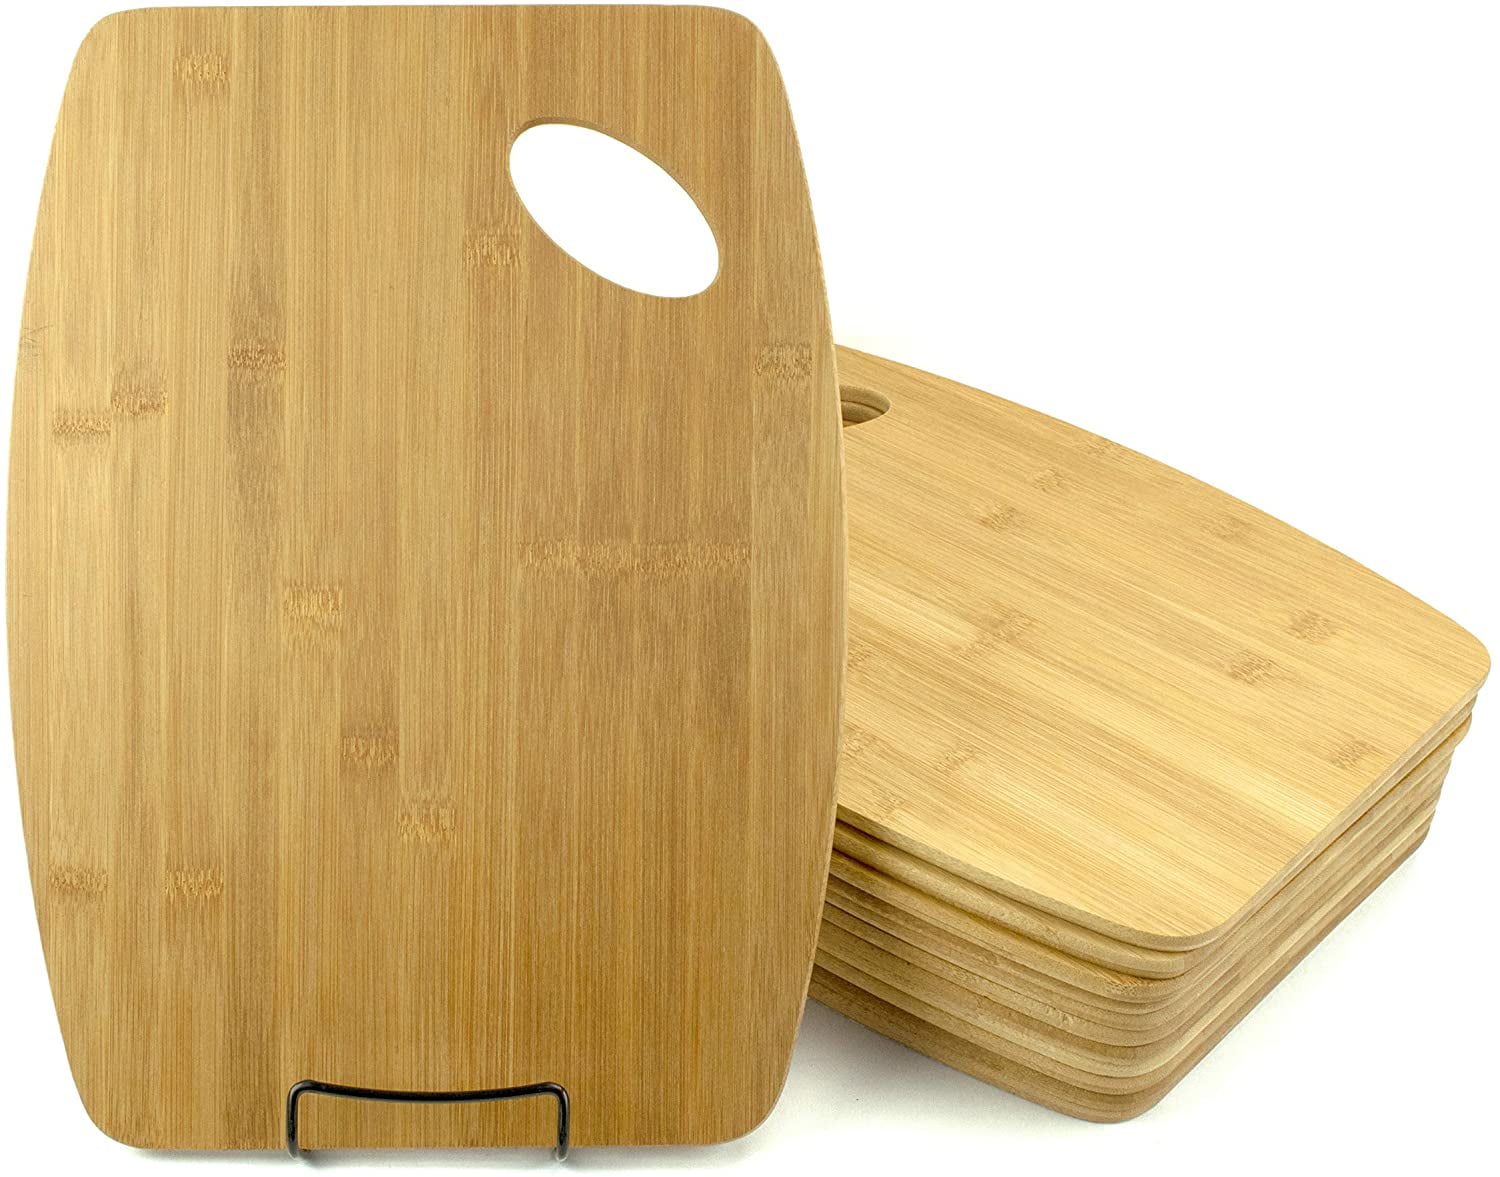 Standard Plain Cutting Board (9 inches) - Made in USA